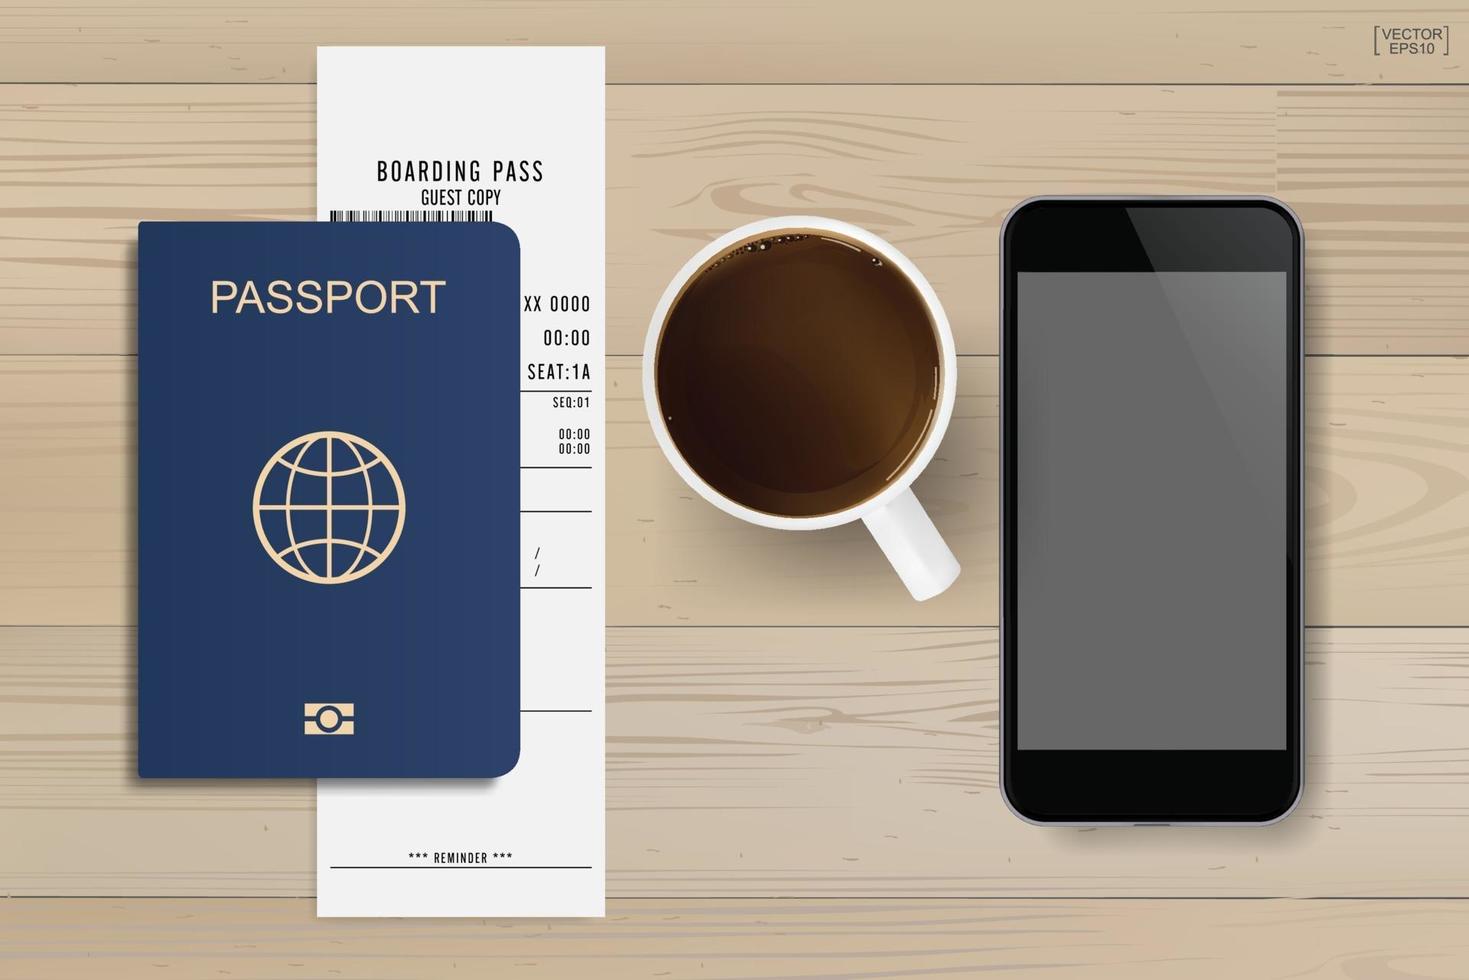 Reisepass, Bordkarte, Tasse und Smartphone auf Holz. vektor